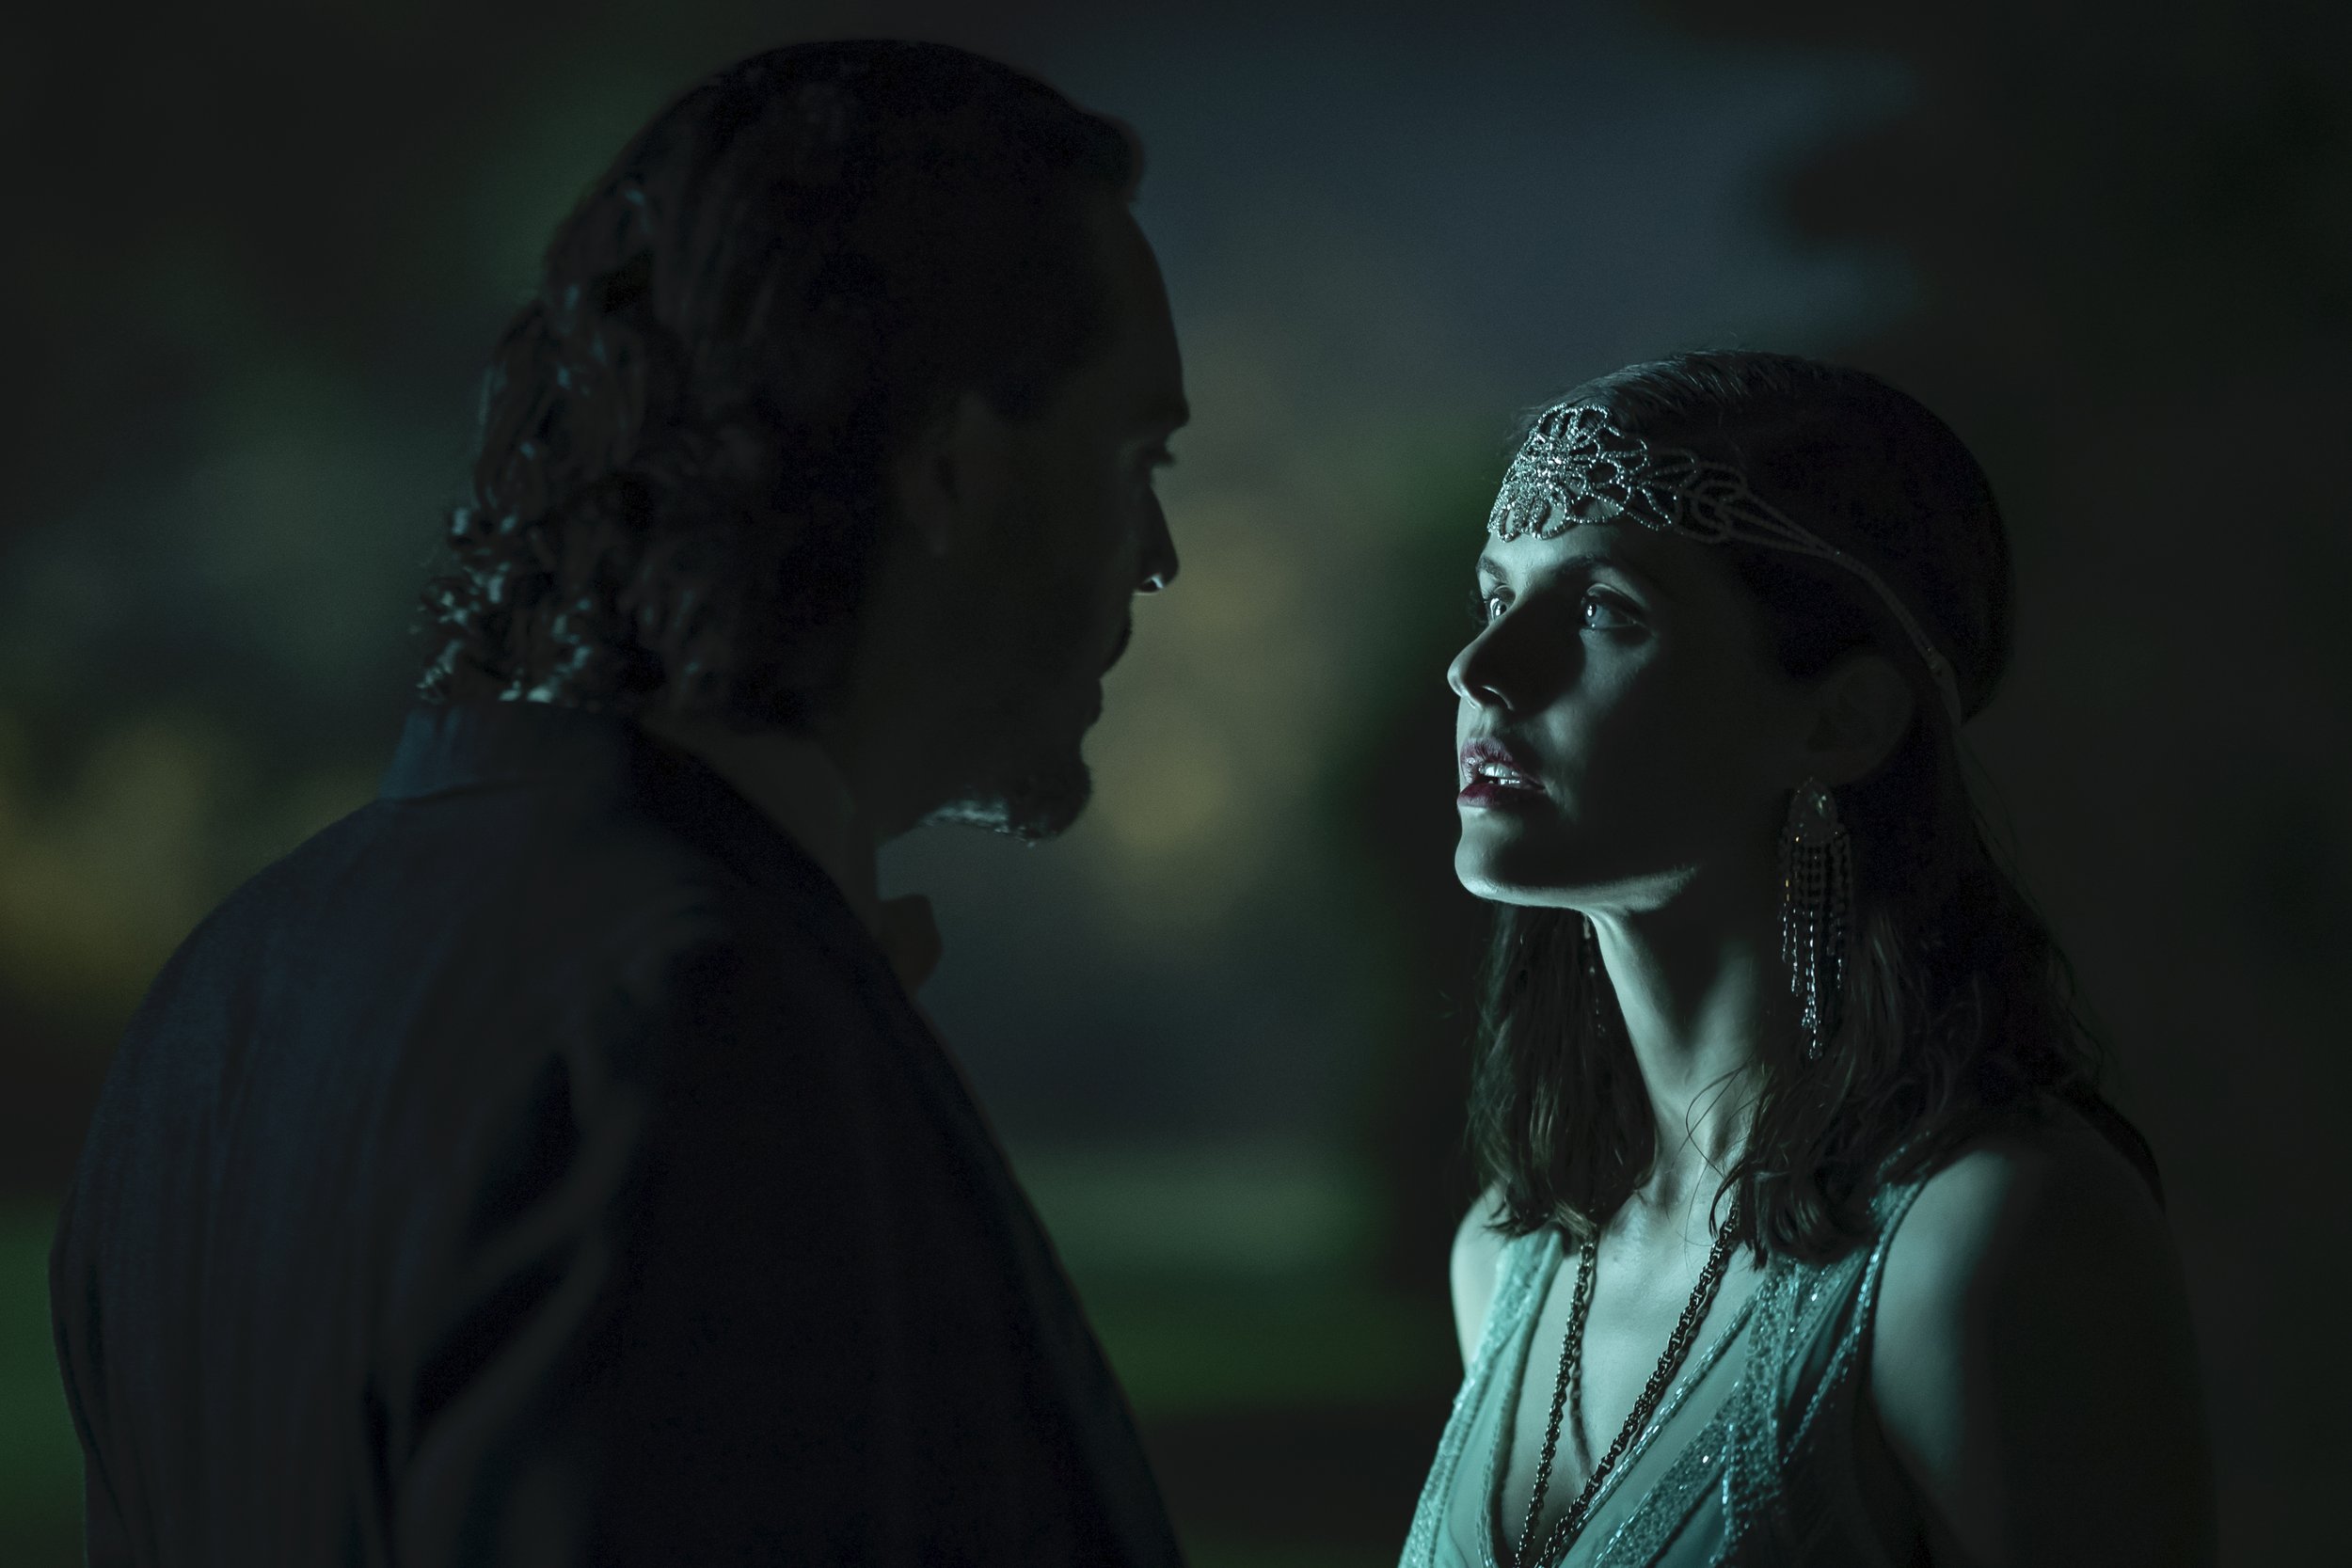  Alexandra Daddario as Dr. Rowan Fielding and Jack Huston as Lasher - Mayfair Witches _ Season 1, Episode 5 - Photo Credit: Alfonso Bresciani/AMC 